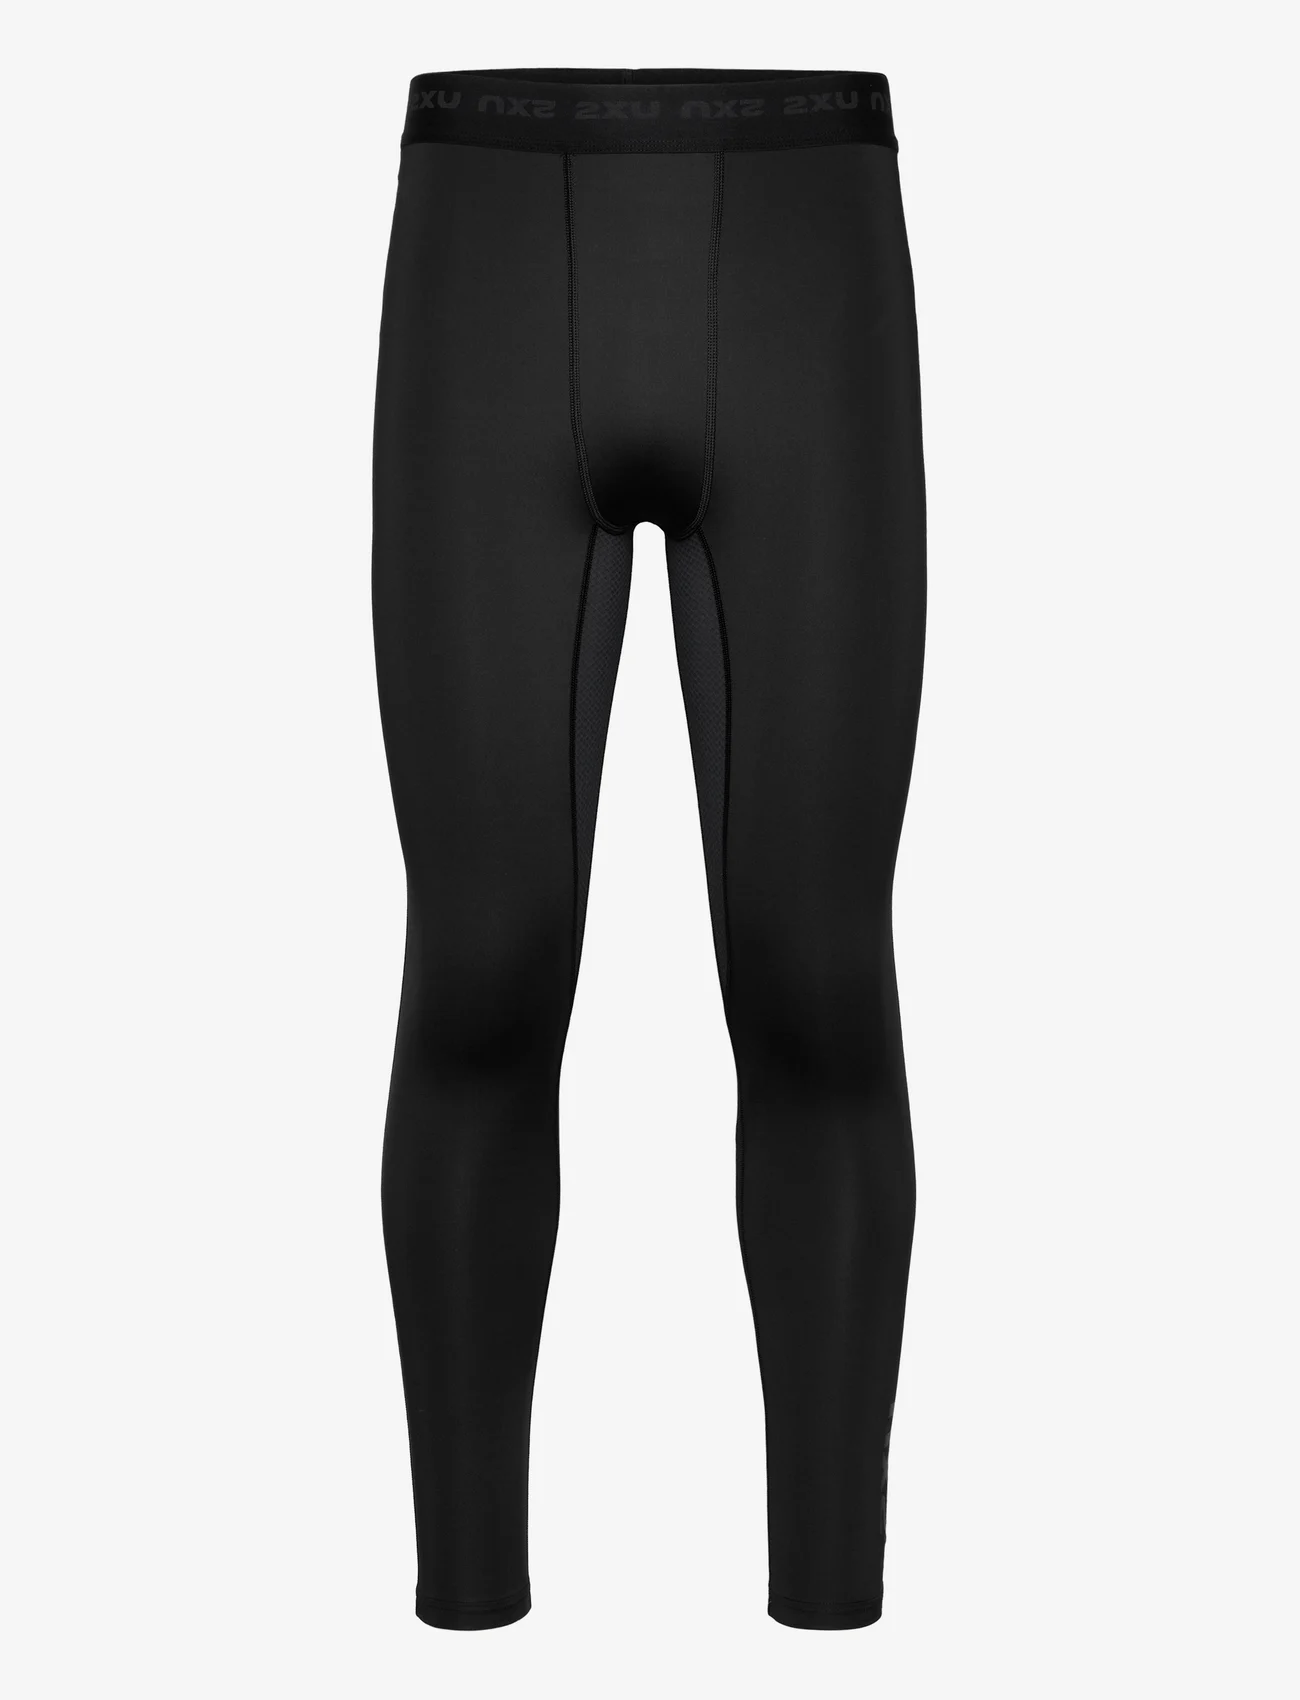 2XU - BASE LAYER COMPRESSION TIGHTS - aluskihina kantavad püksid - black/nero - 0